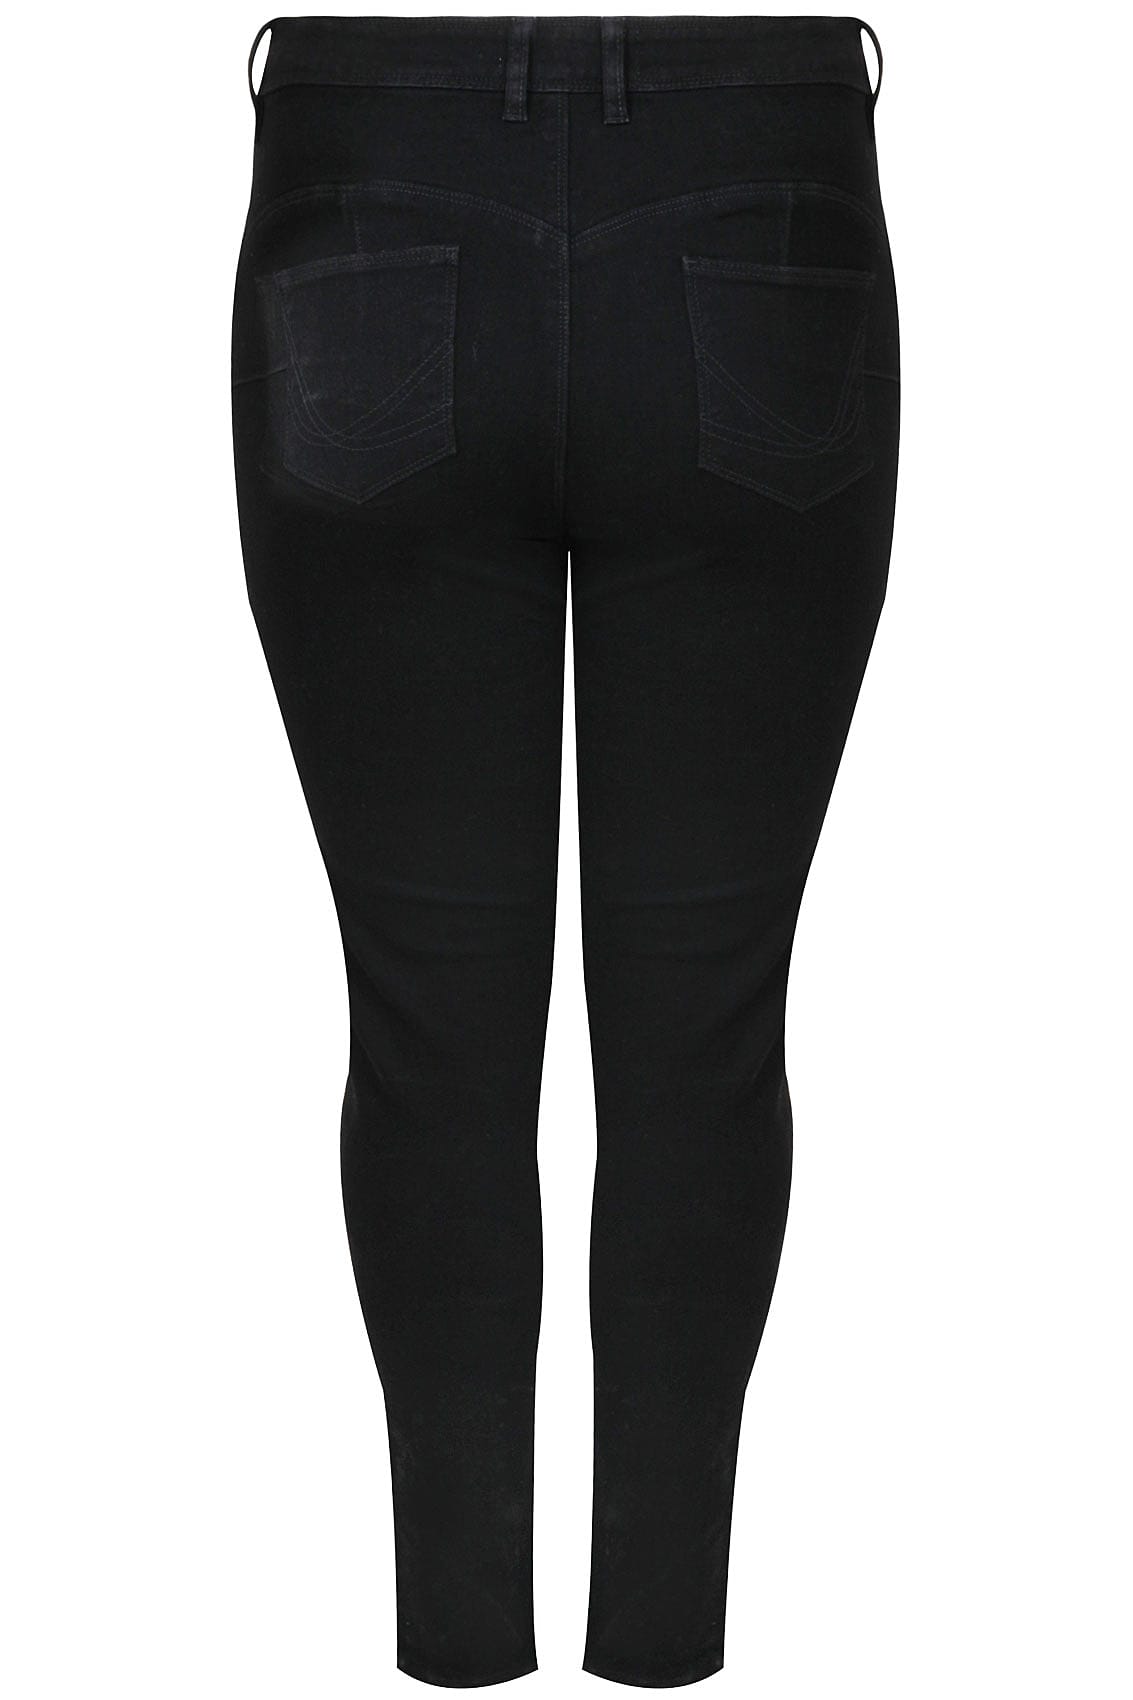 Black Denim Skinny SHAPER AVA Jeans, Plus size 14 to 28